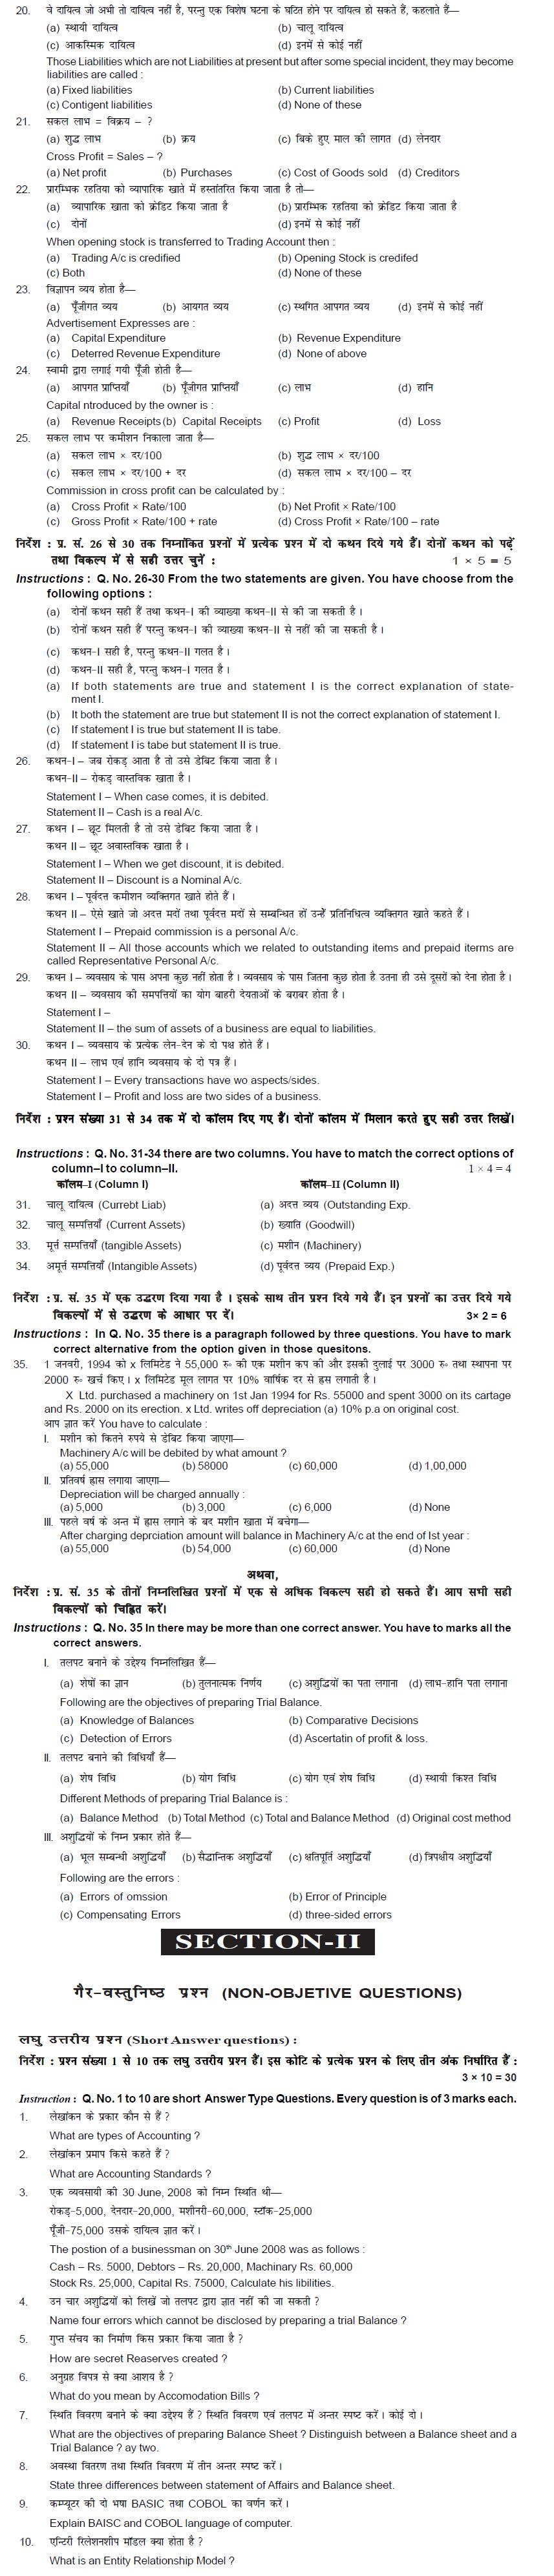 Bihar Board Class XI Commerce Model Question Papers - Accountancy